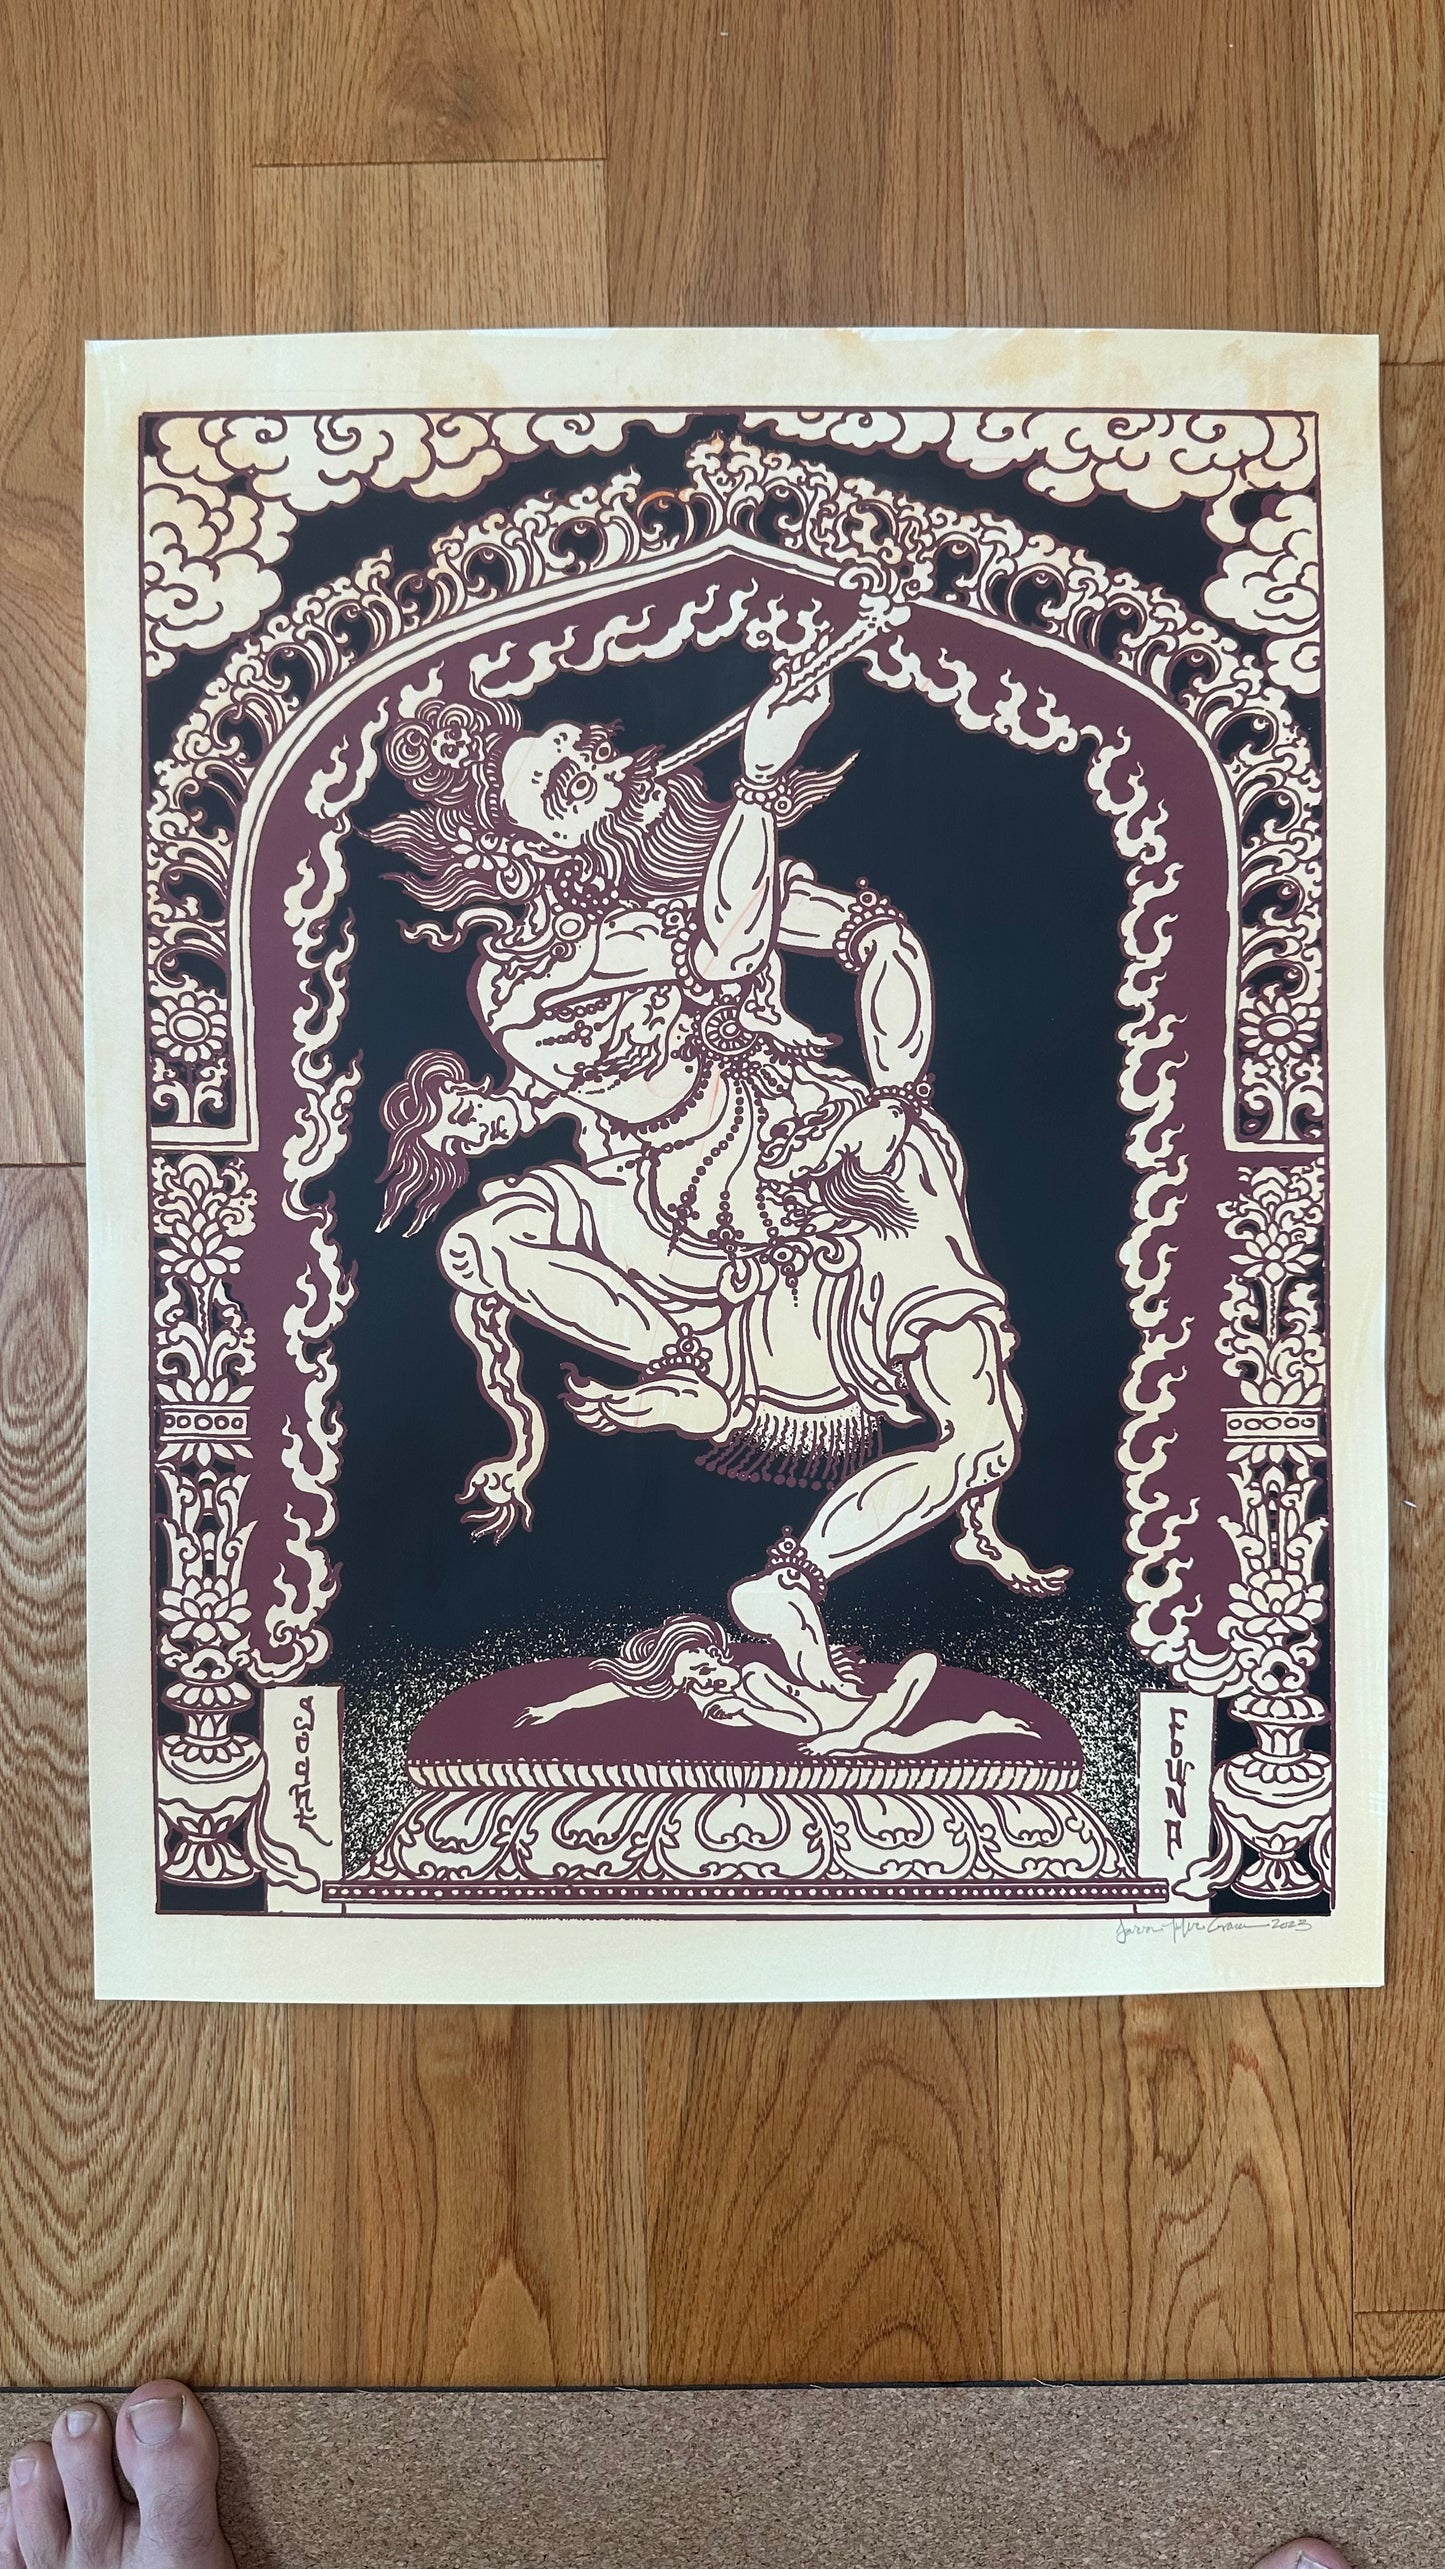 Sri Mahakala hand painted silkscreen print